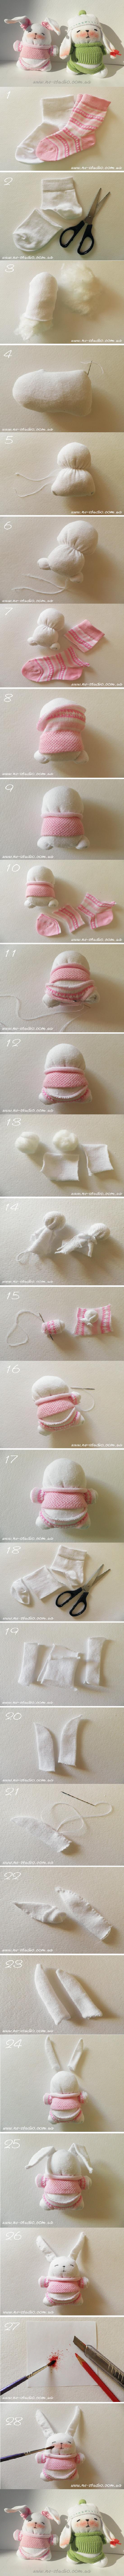 DIY Adorable Fabric Rabbit from Socks 2